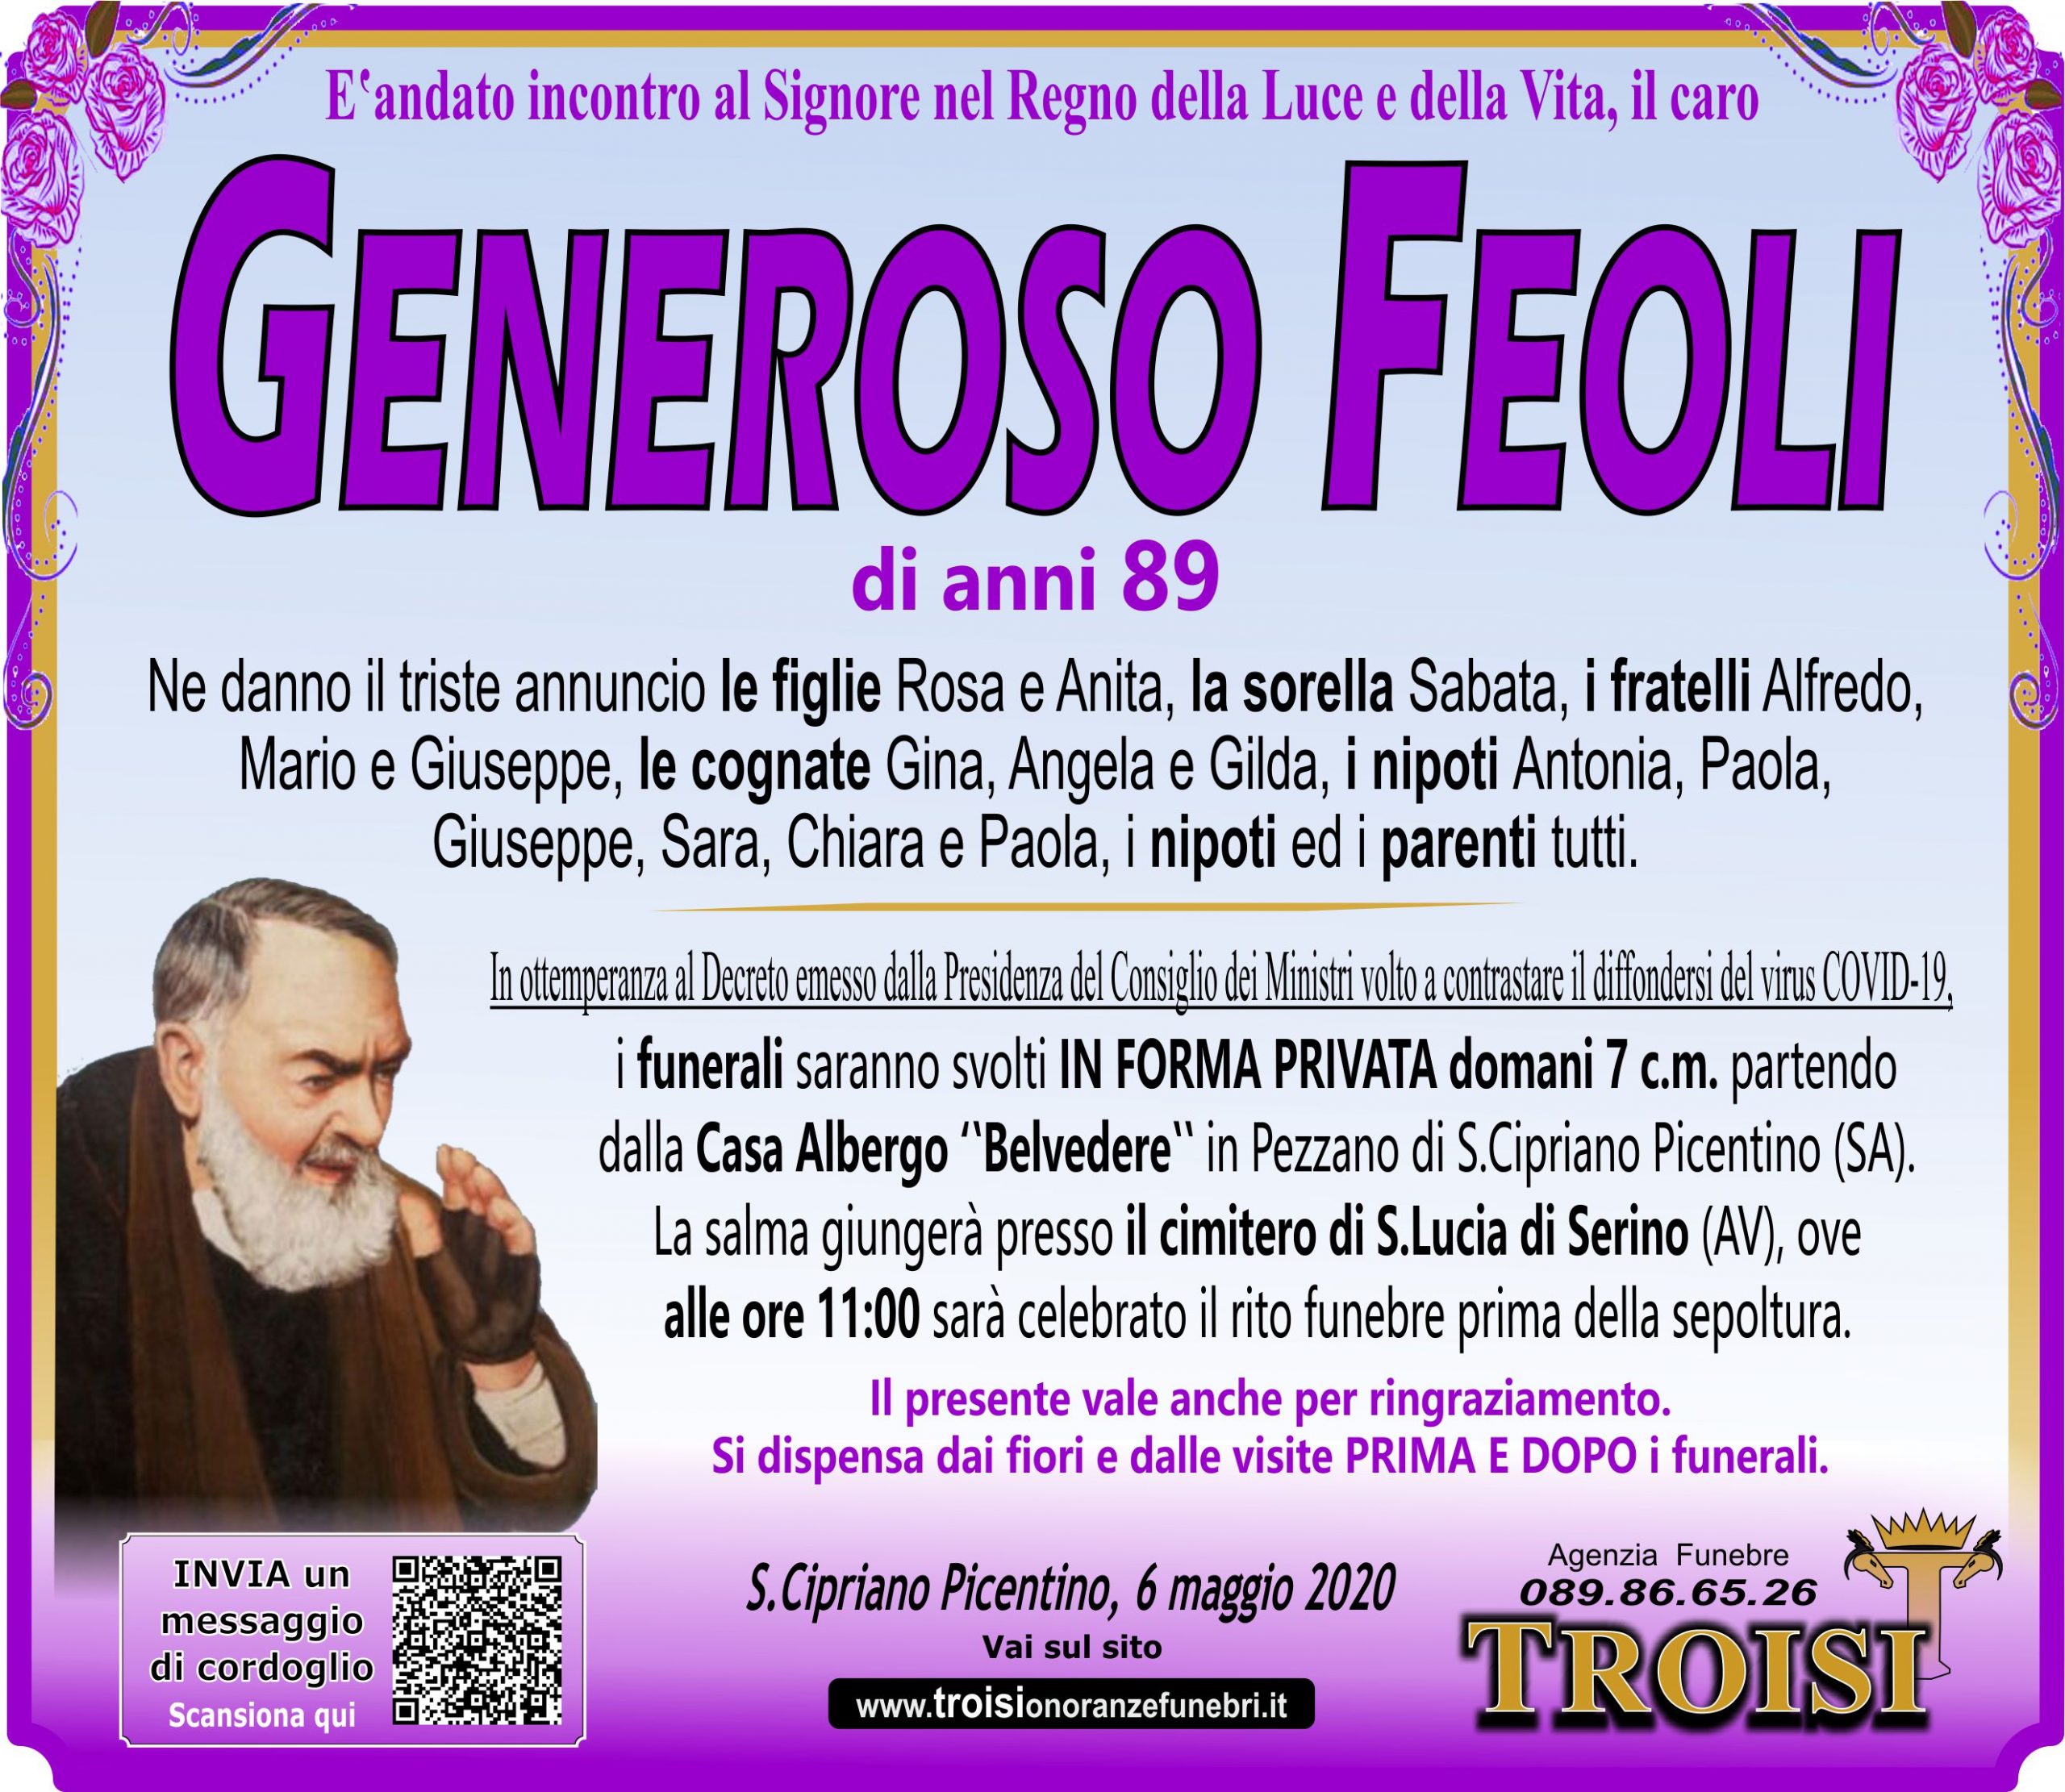 GENEROSO FEOLI